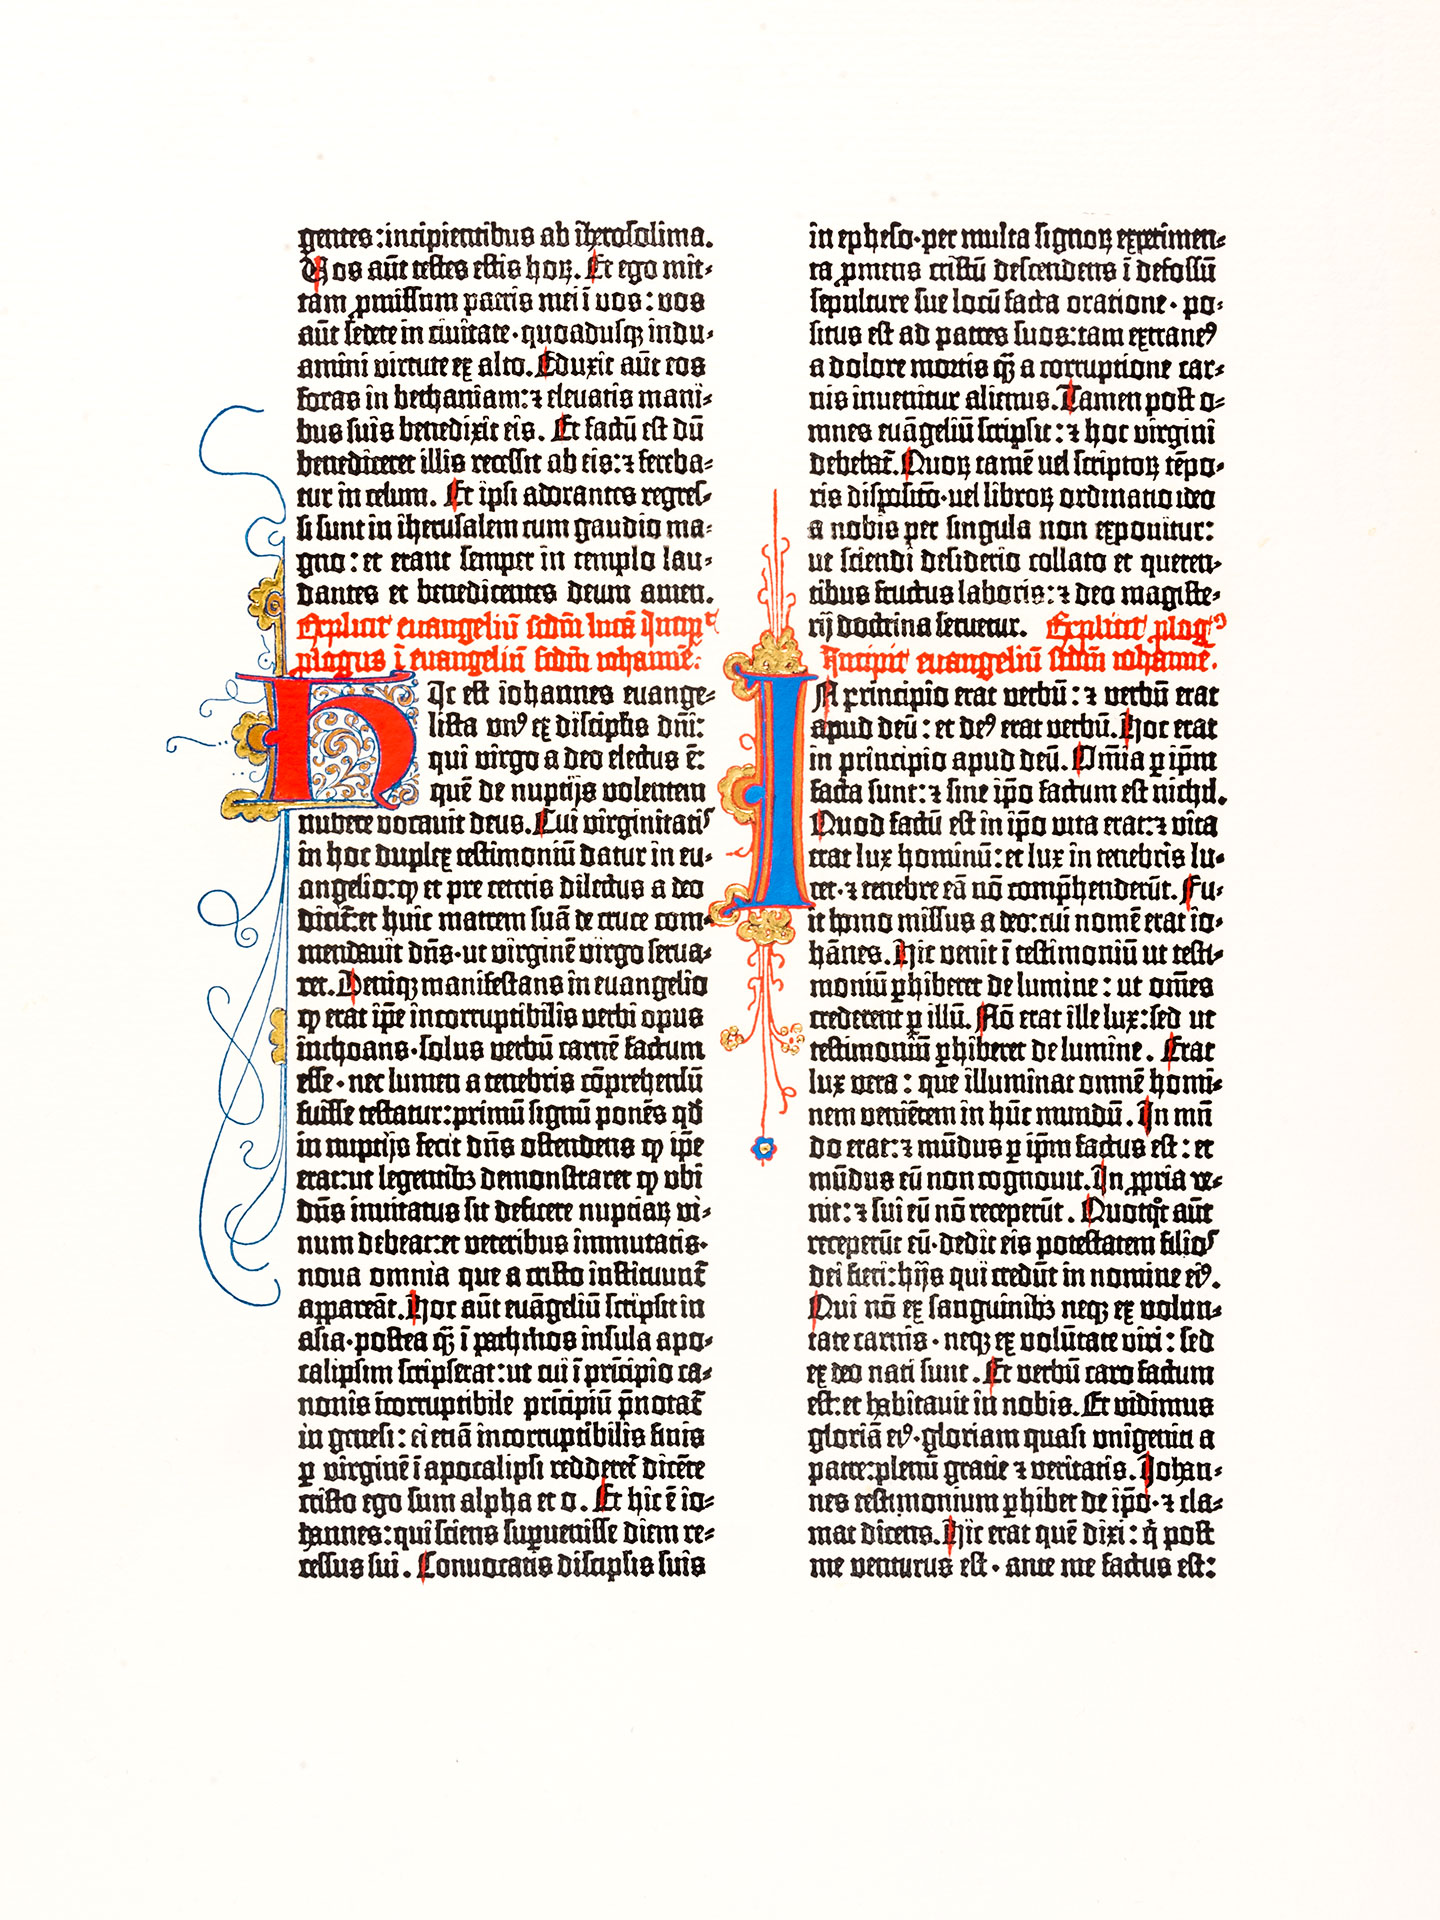 The Gospel of St. John. Press print from the Gutenberg Bible